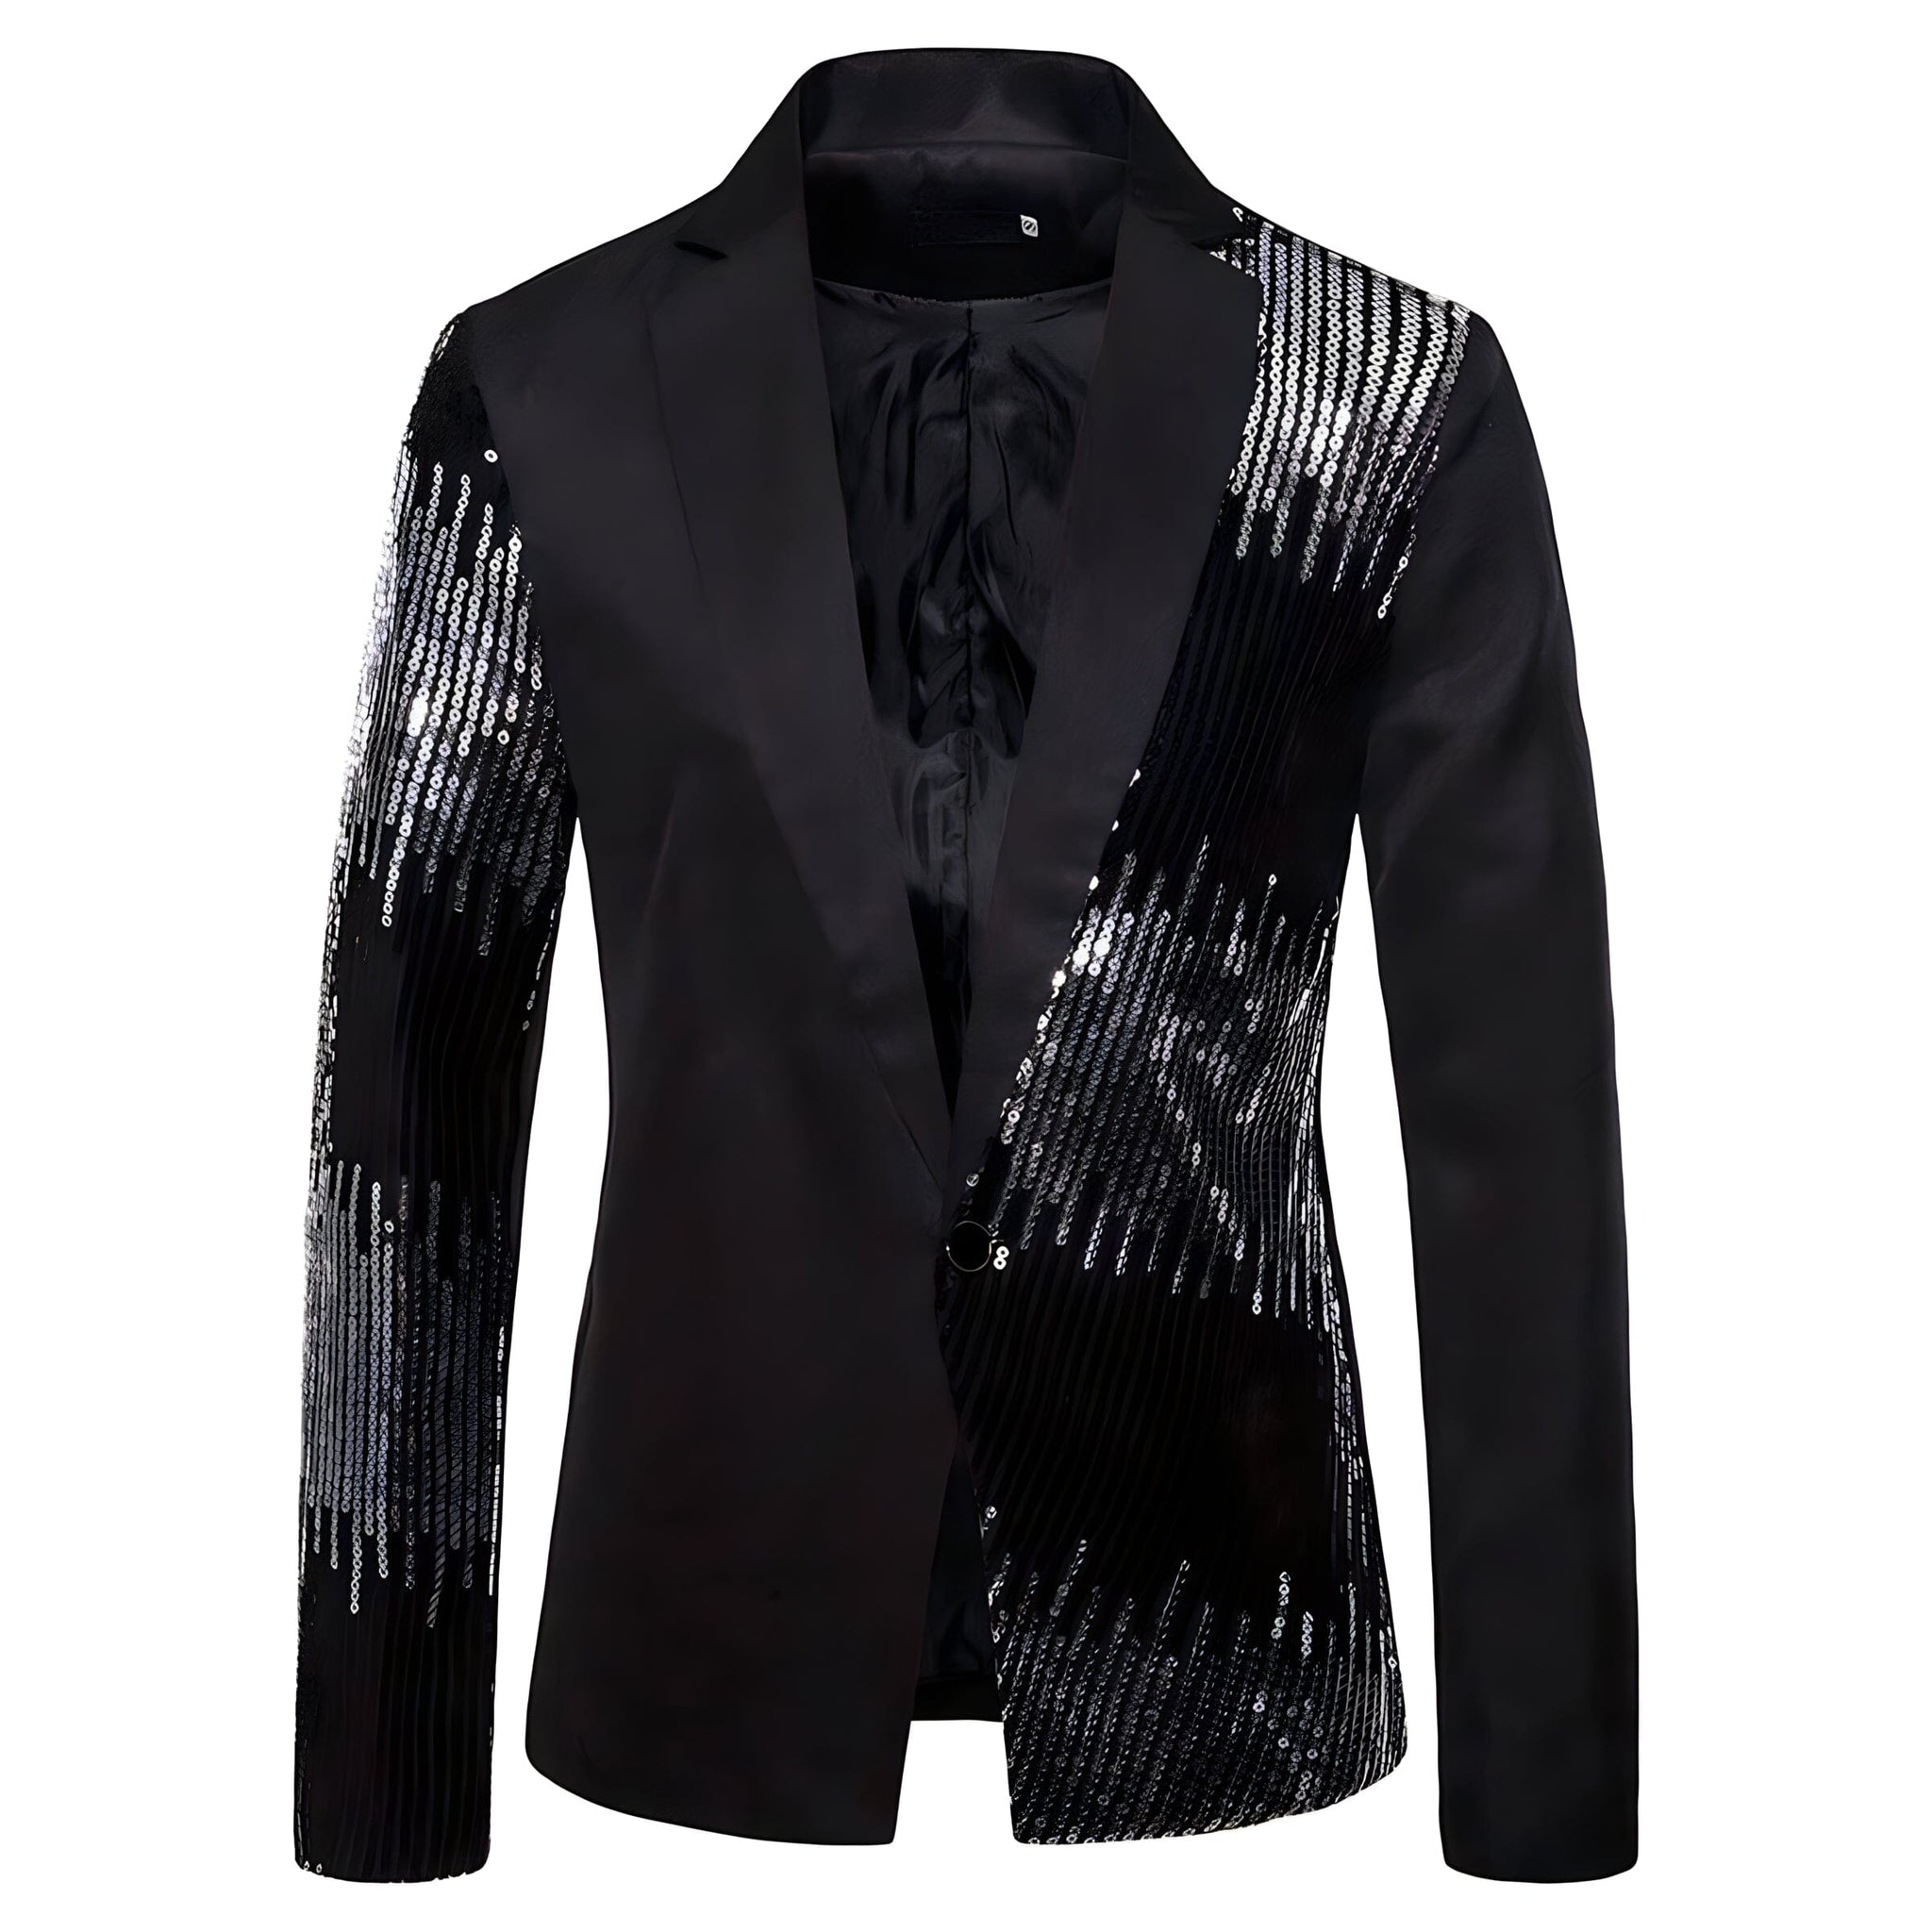 The Strass Slim Fit Blazer Suit Jacket - Jet Black Shop5798684 Store S 